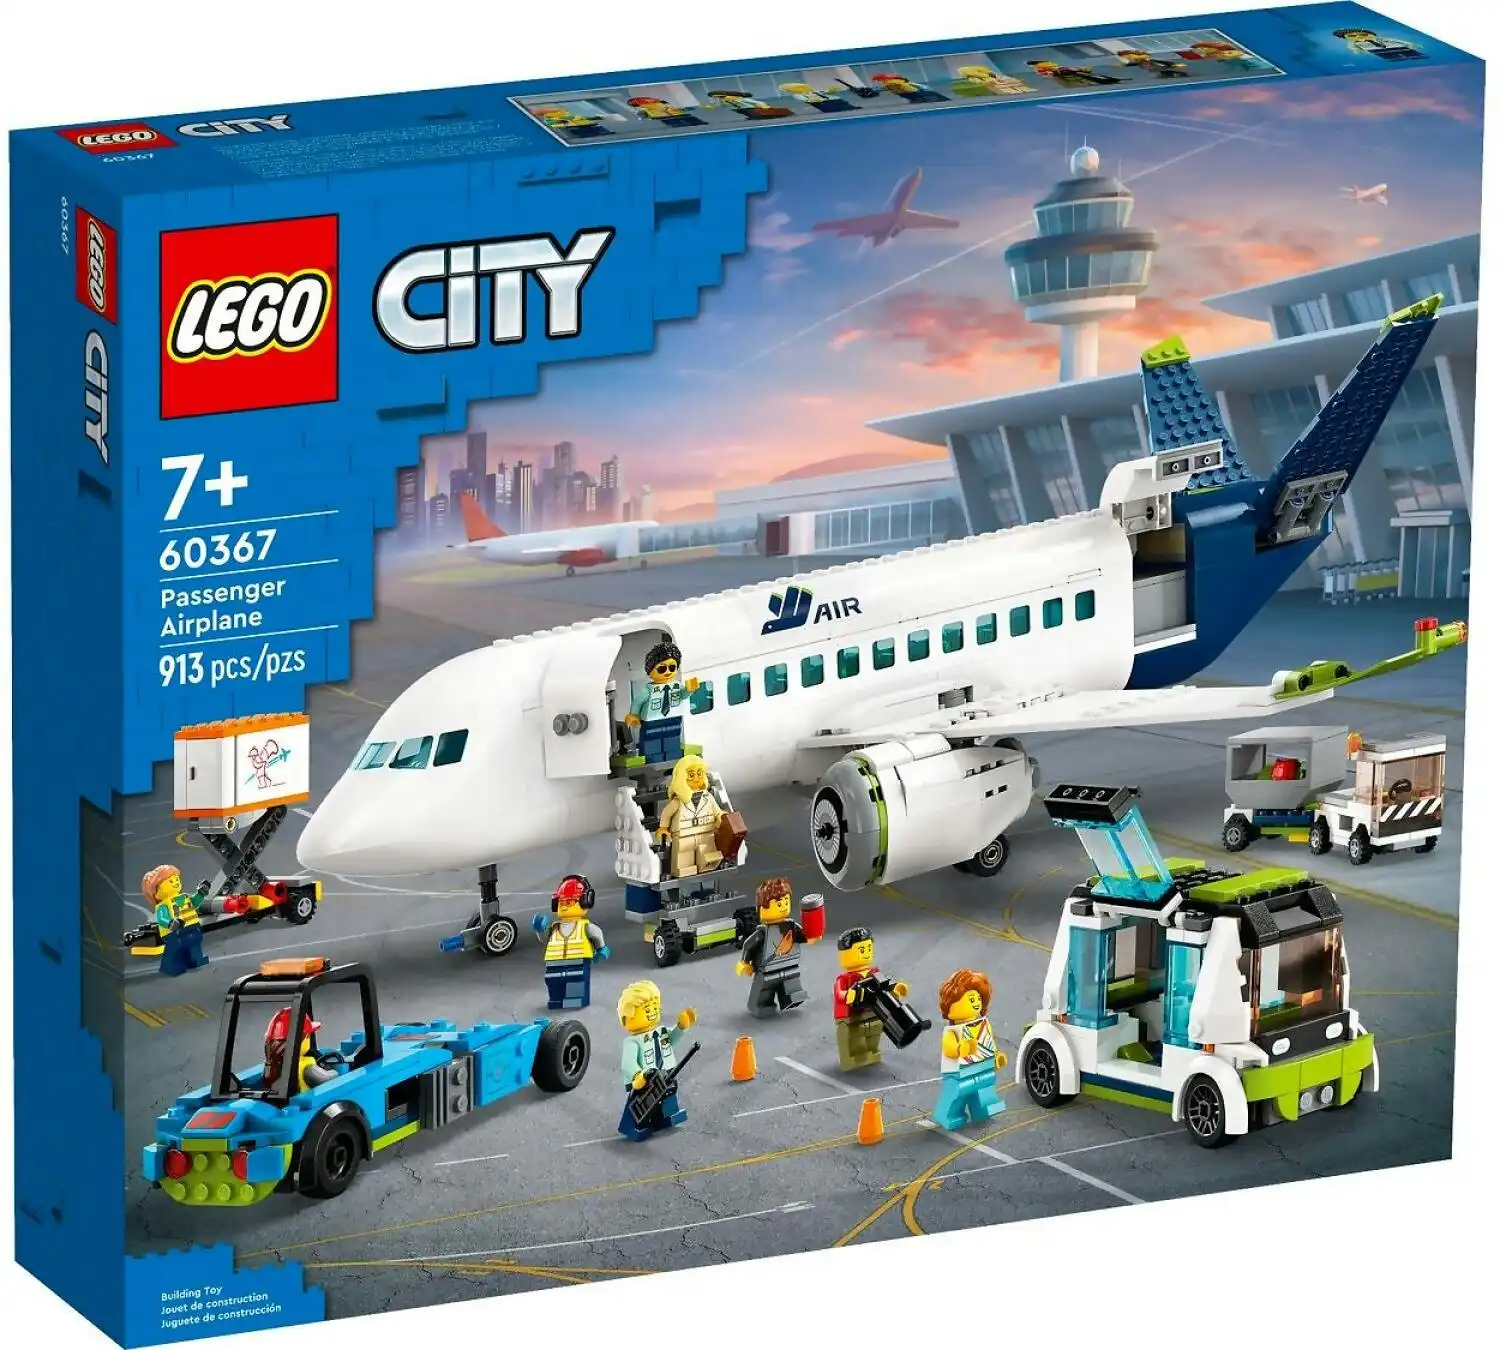 LEGO 60367 Passenger Airplane - City